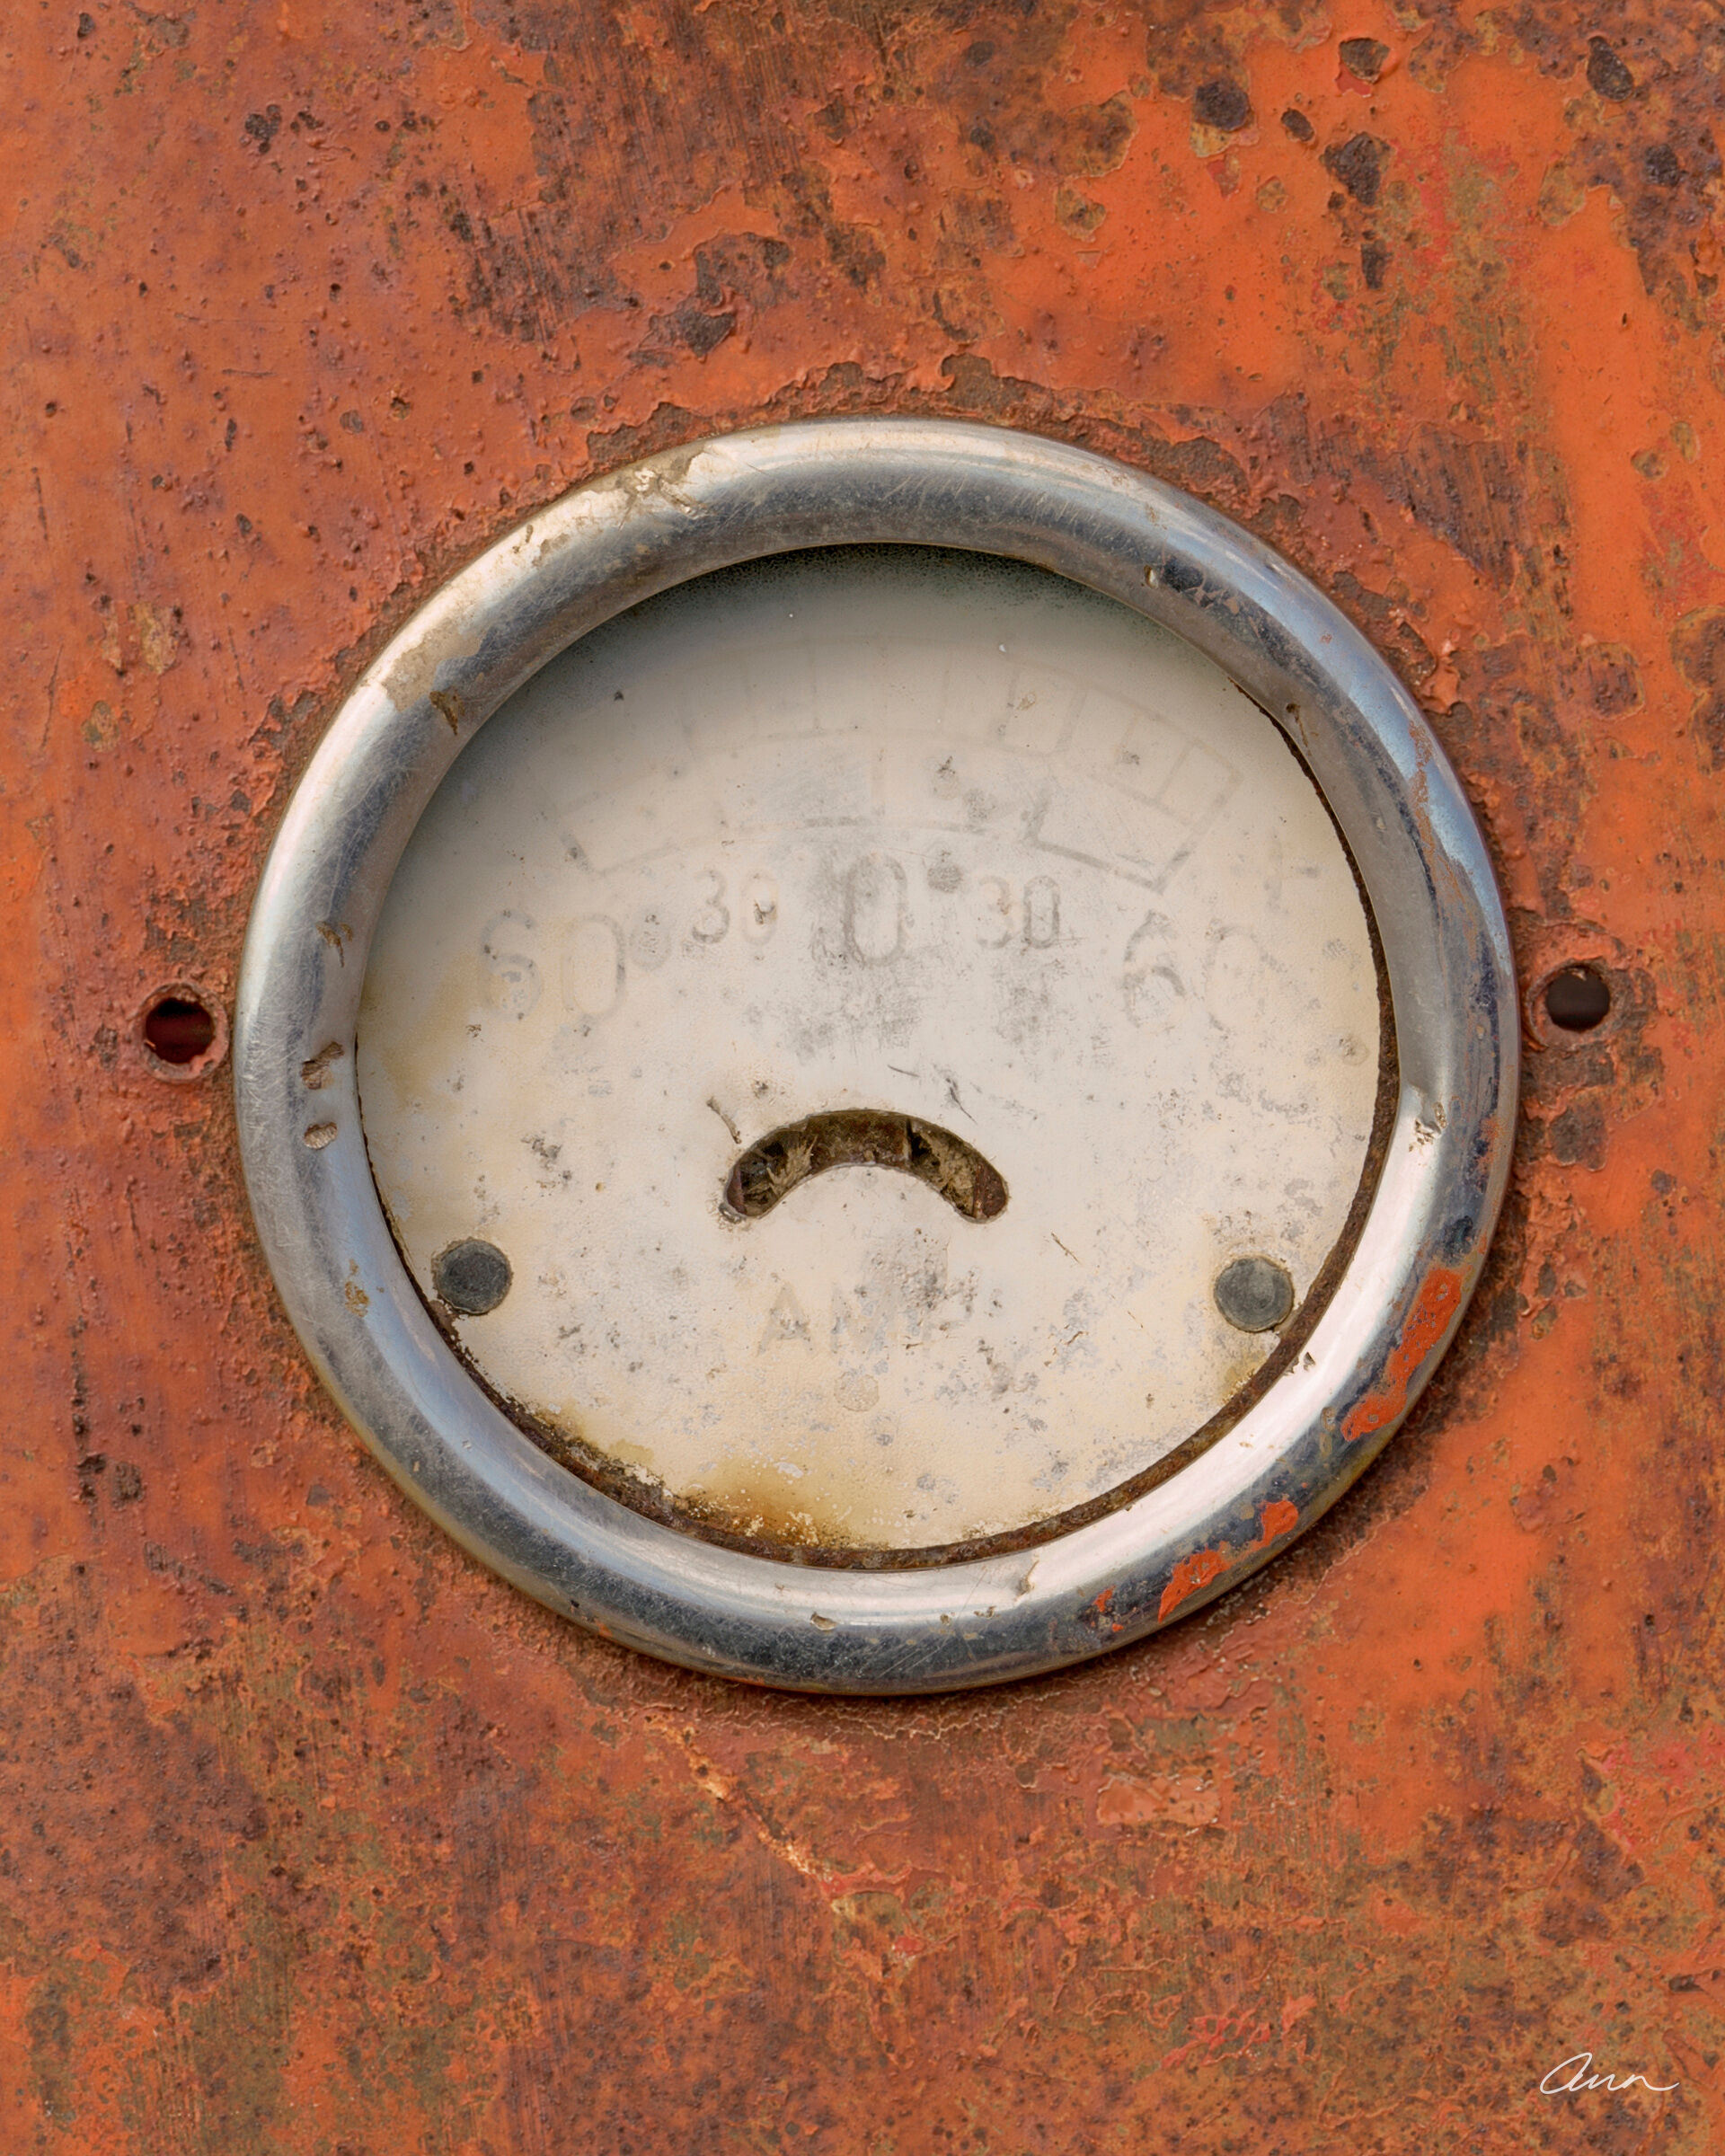 Upside down smile on antique truck meter